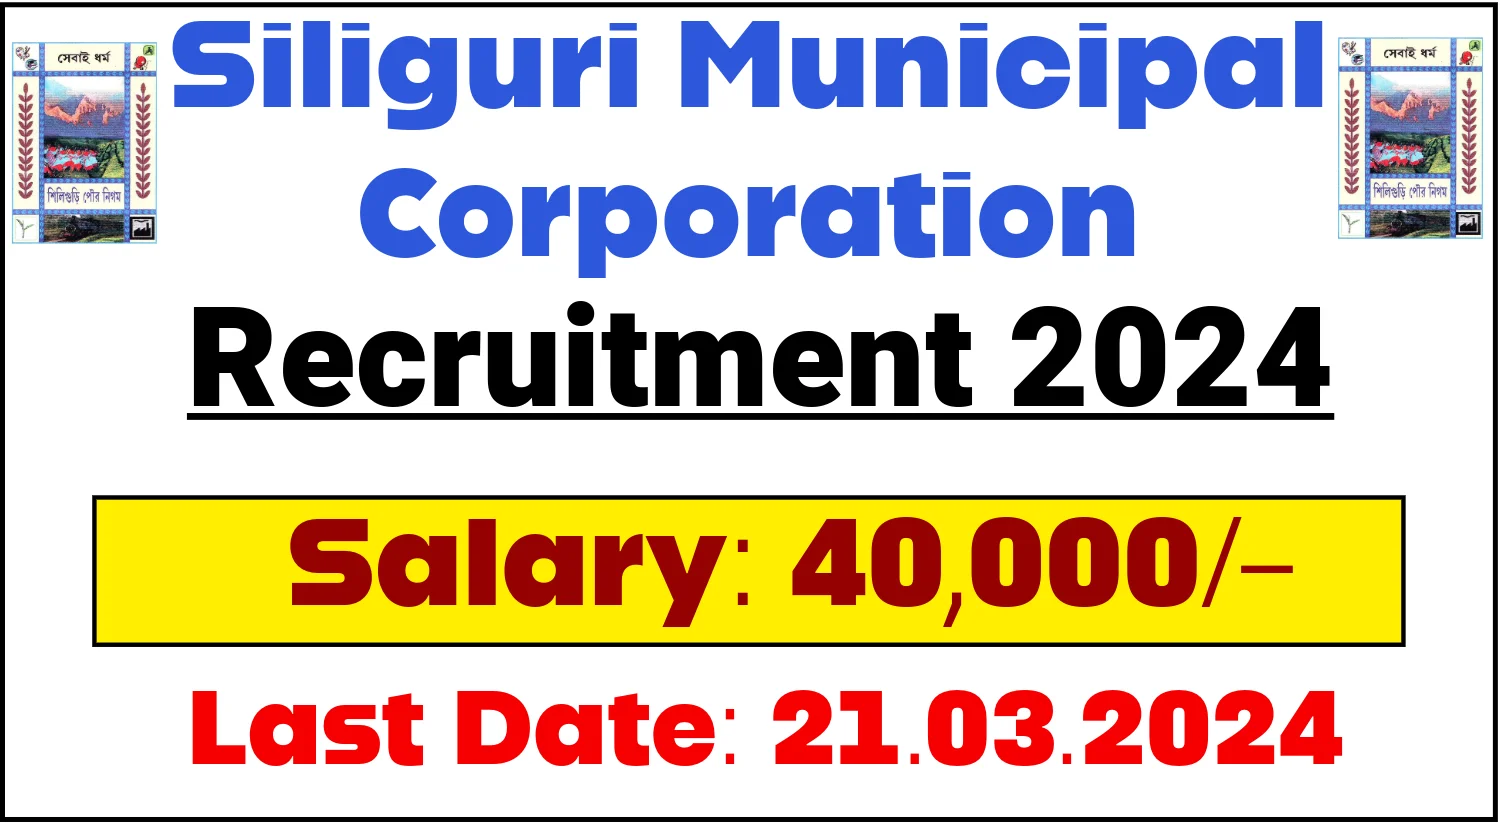 Siliguri Municipal Corporation Recruitment 2024, Check Details